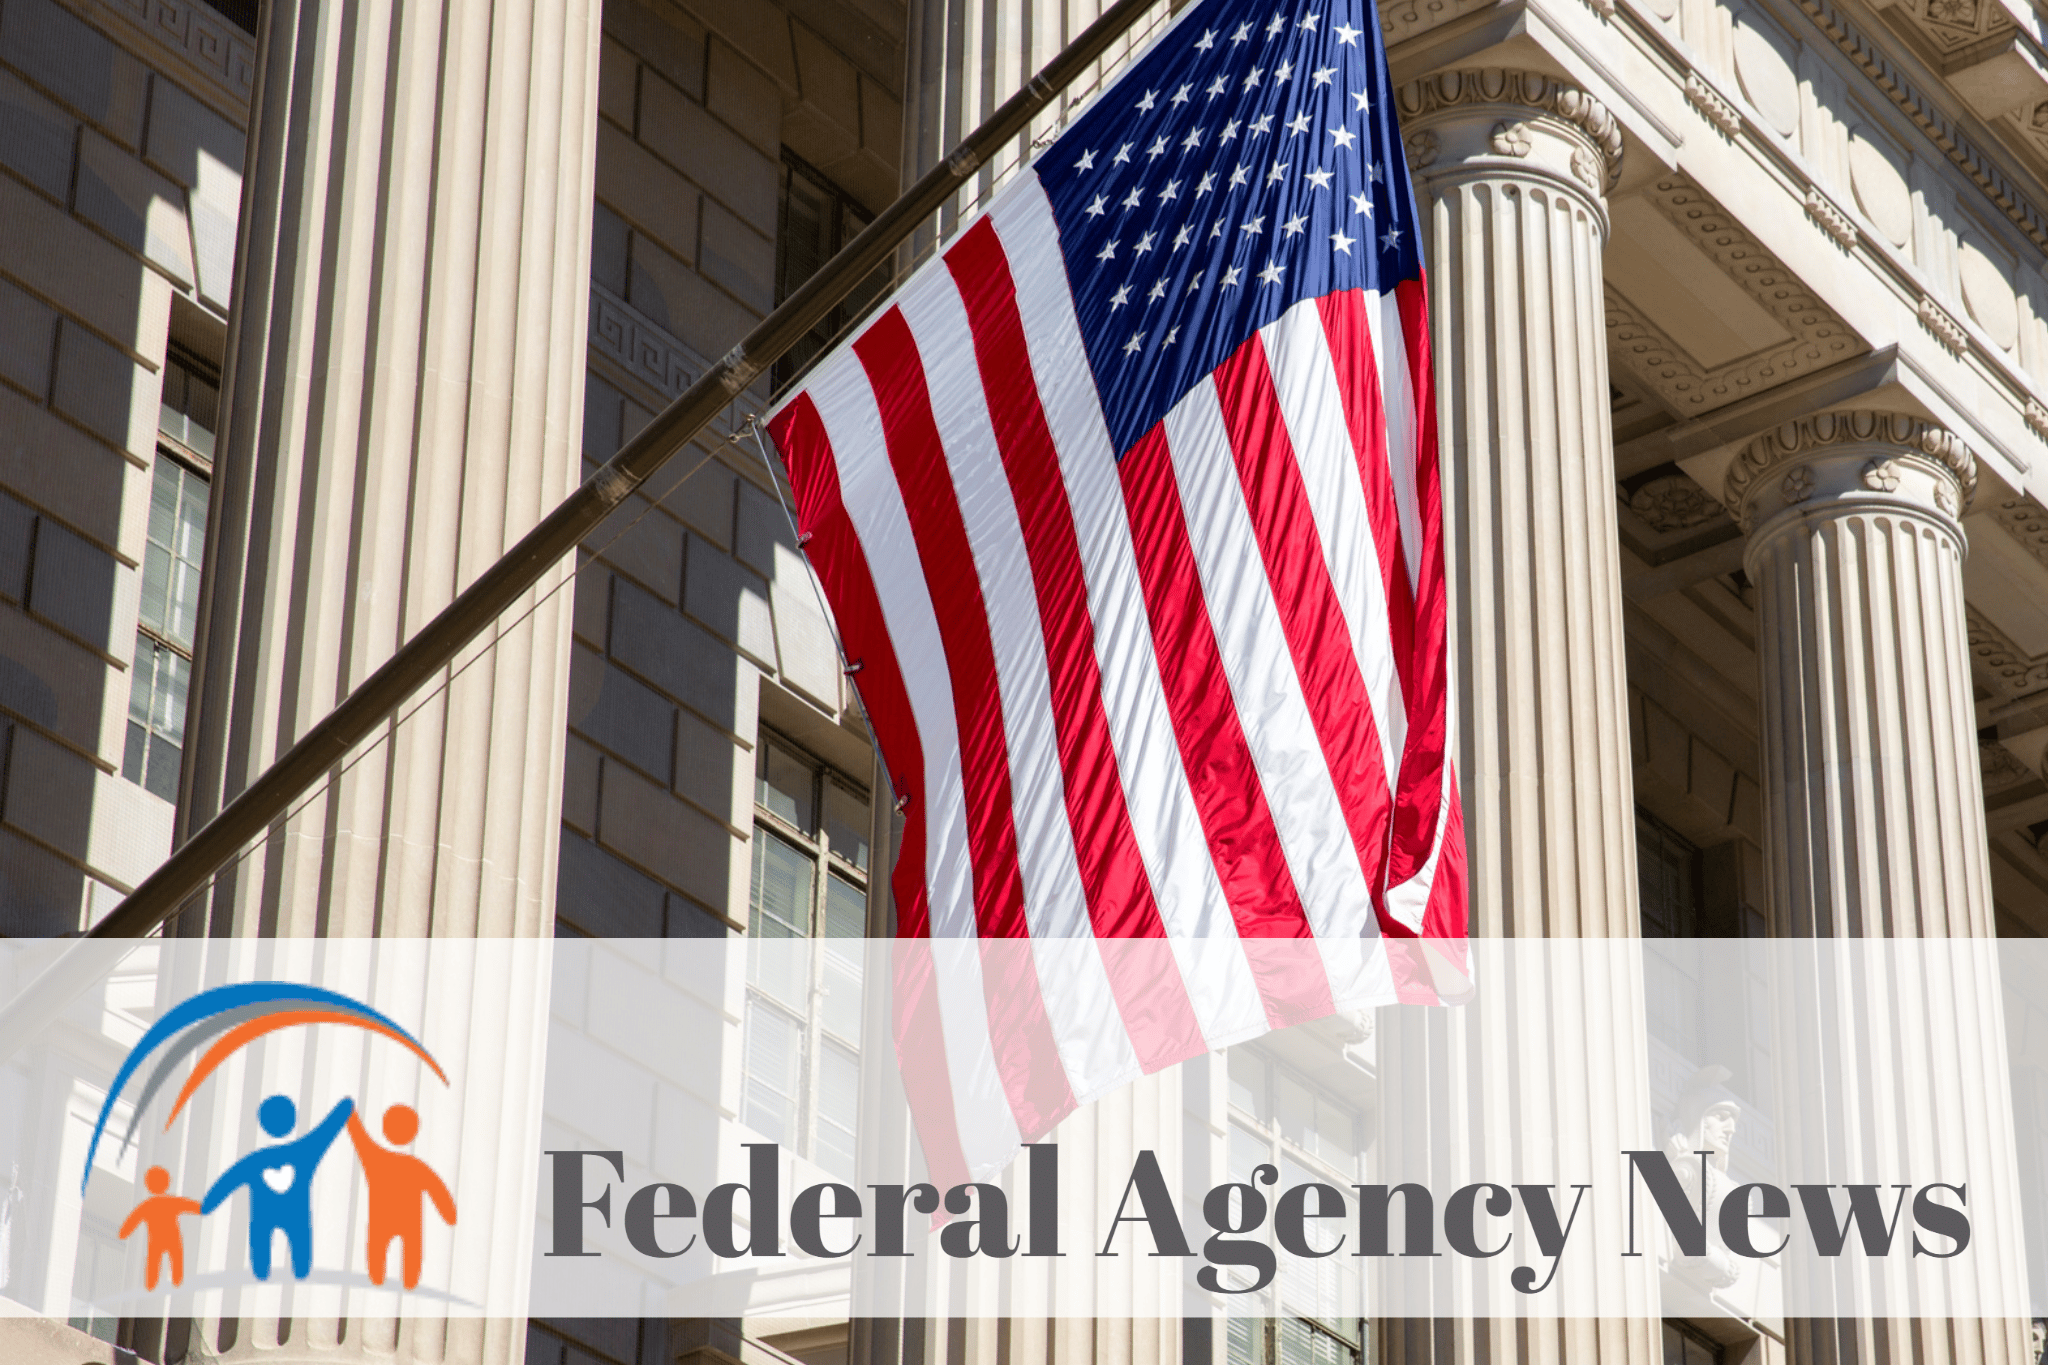 Federal Agency News 1 (1)